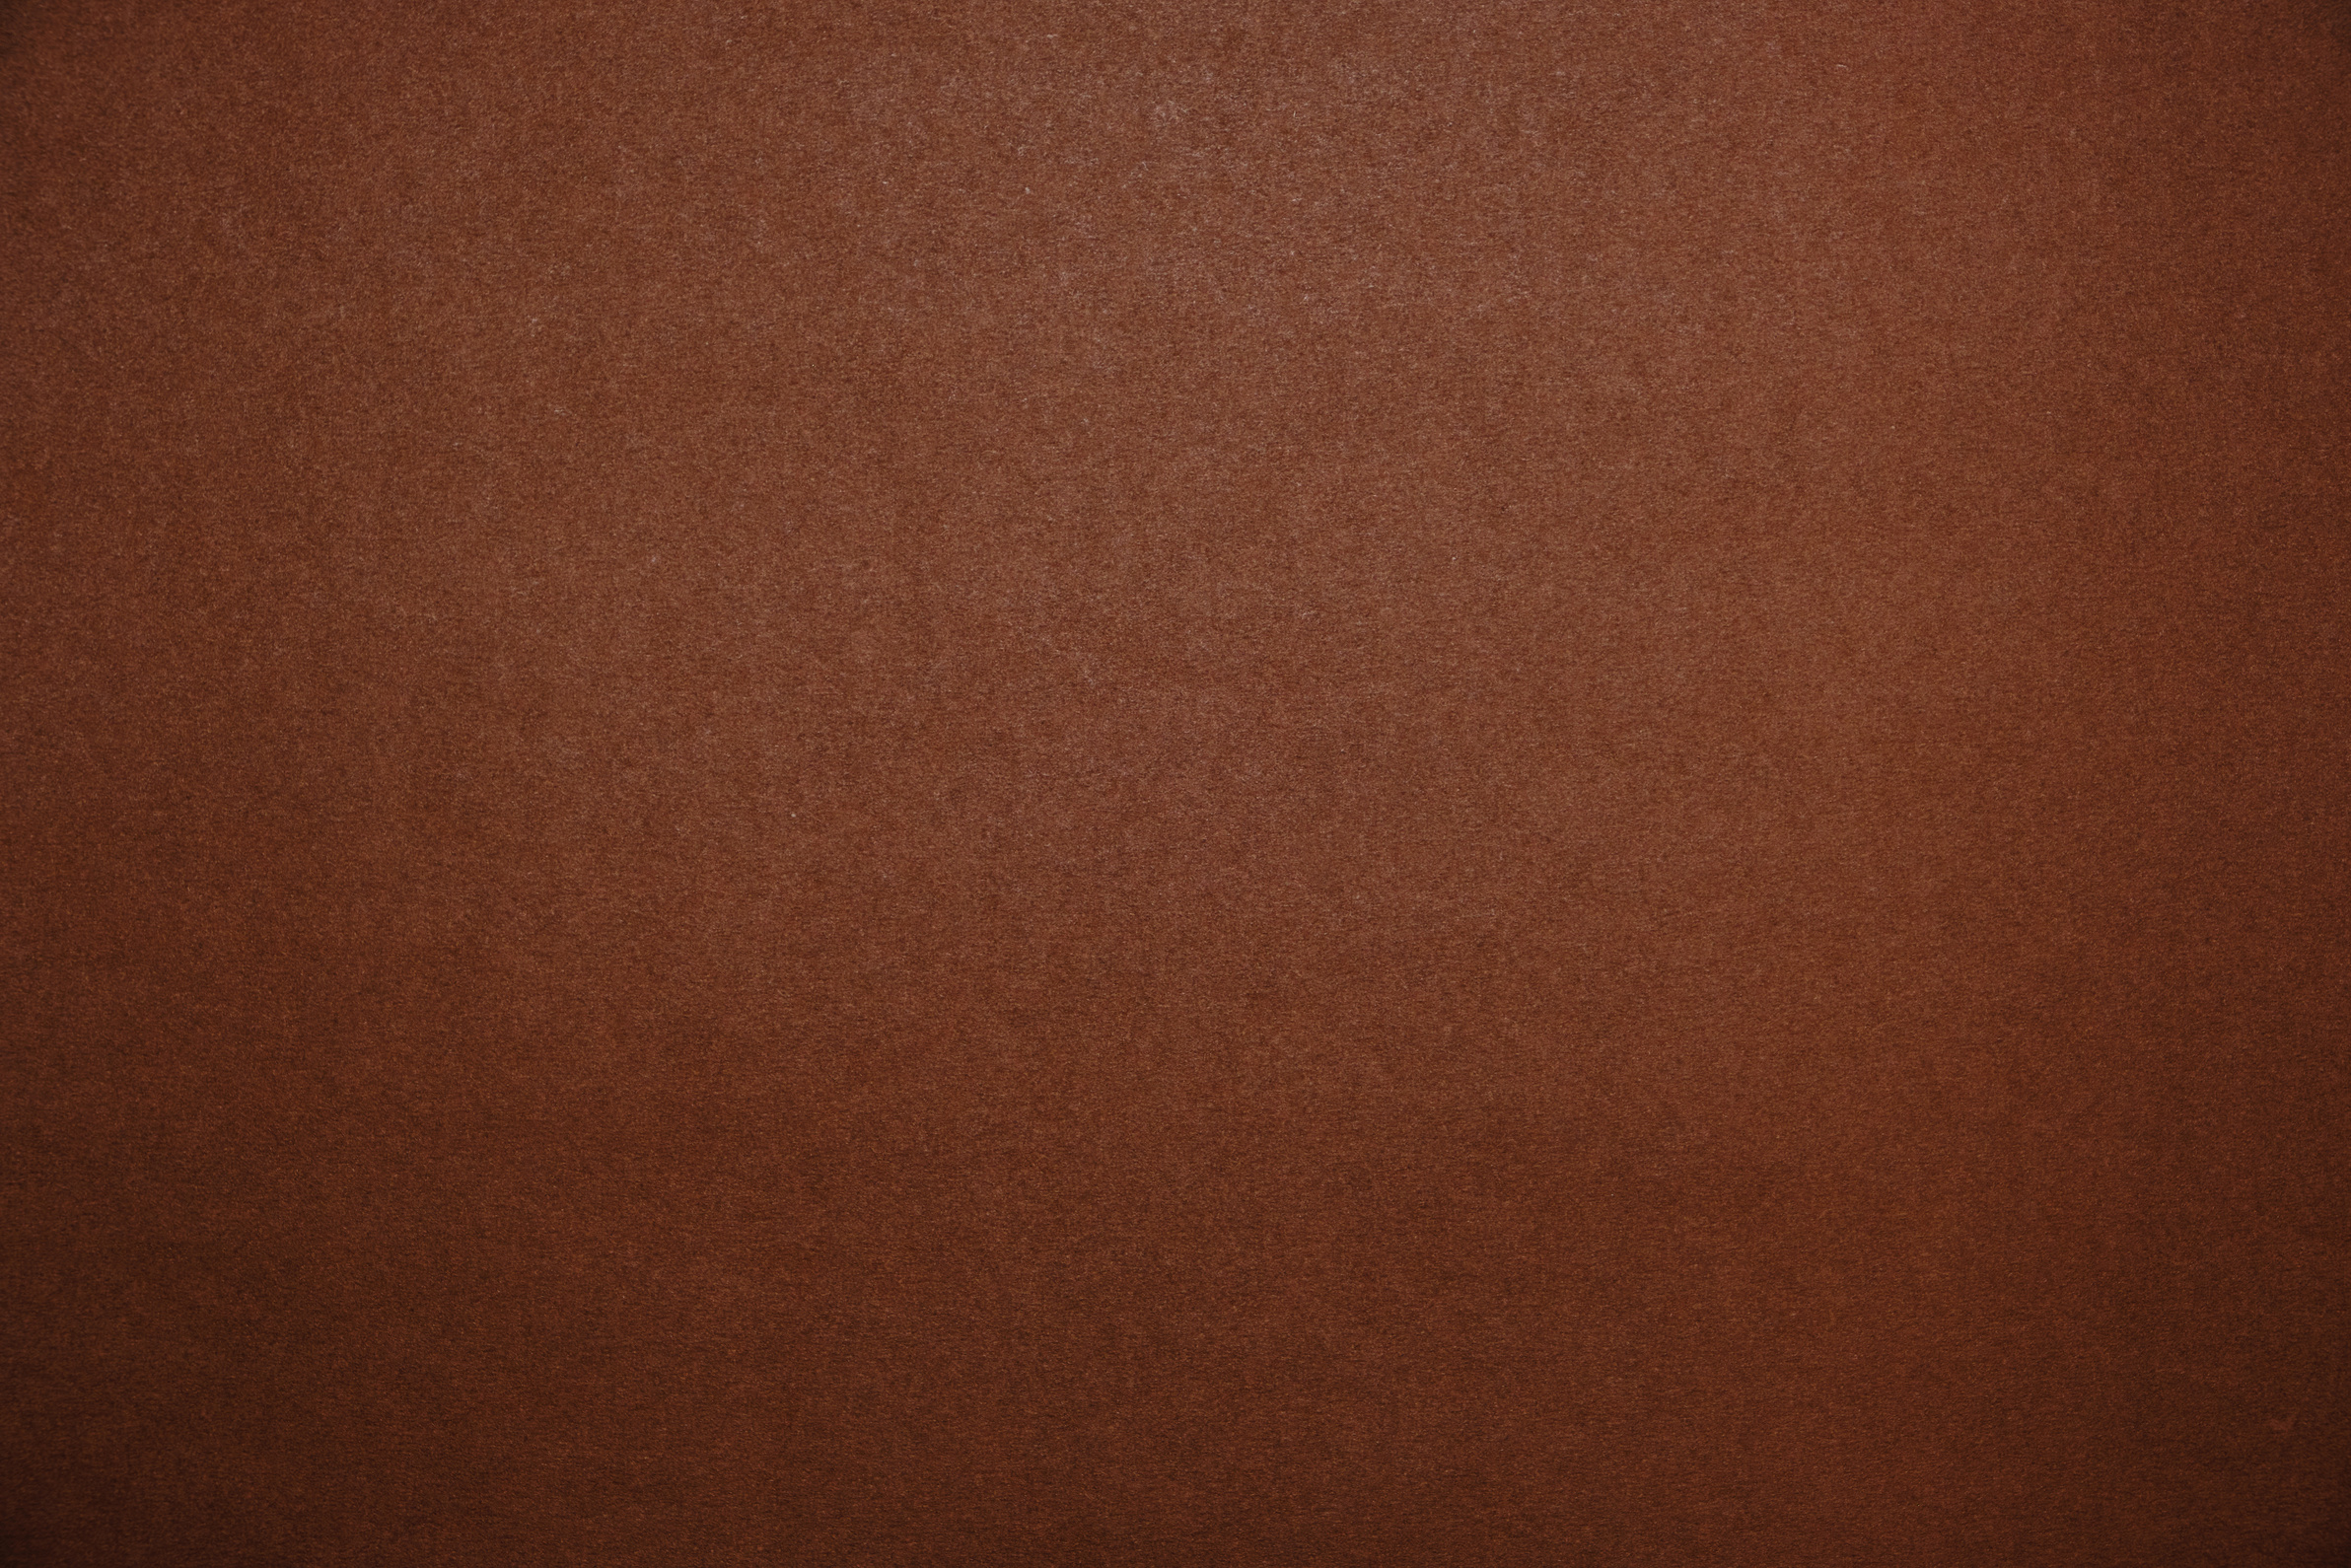 Bright brown background.Brown cardboard texture.